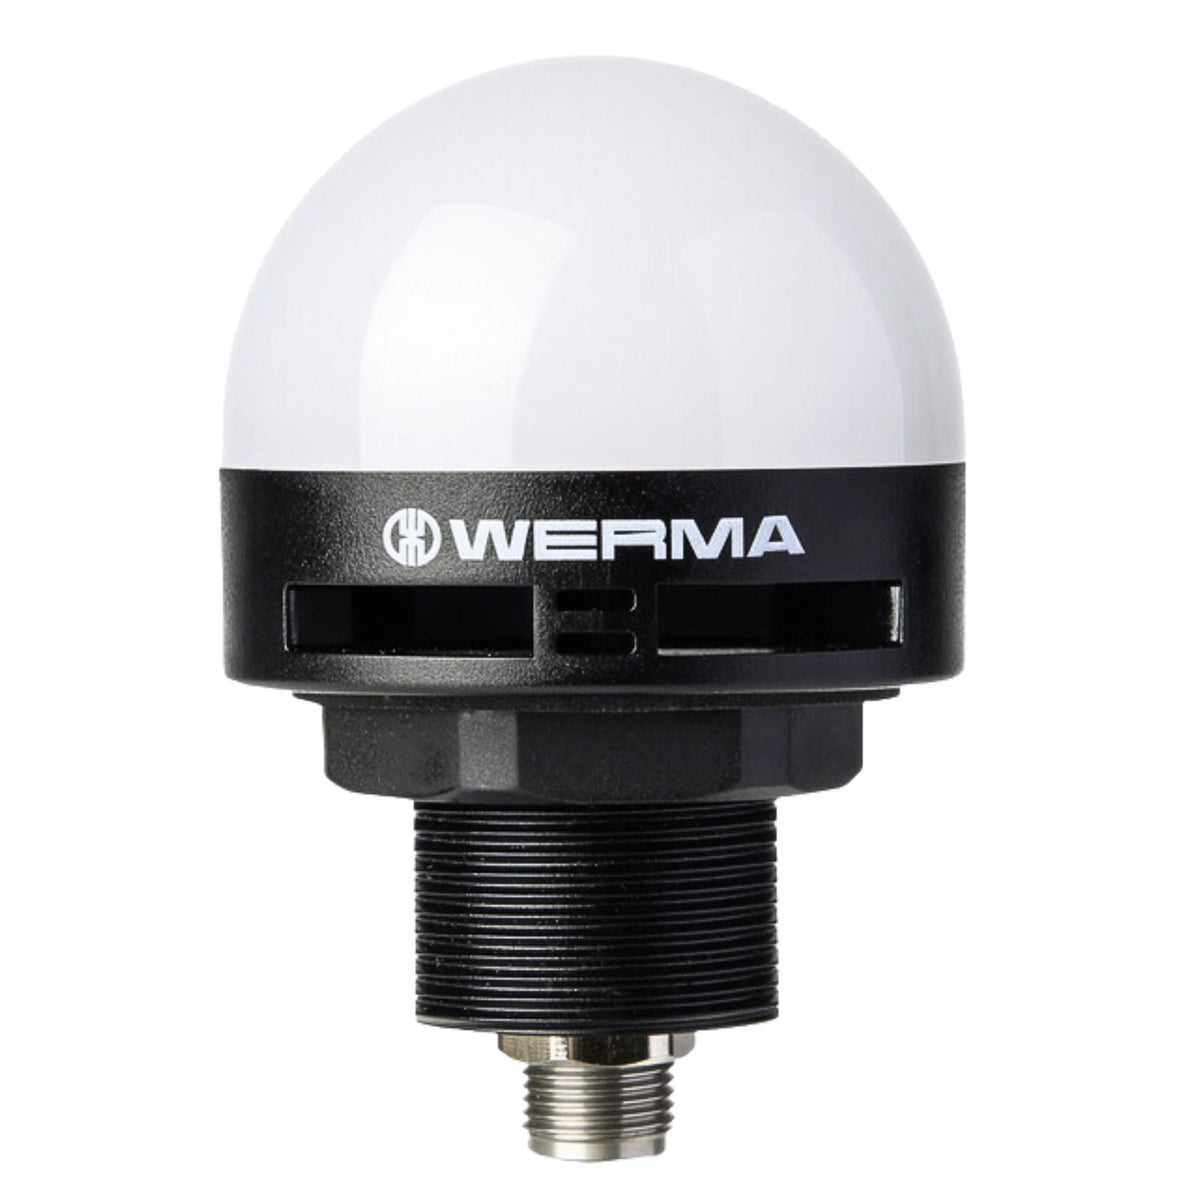 Beacon + Buzzer, RGY | 240.440.55 used on Werma product line